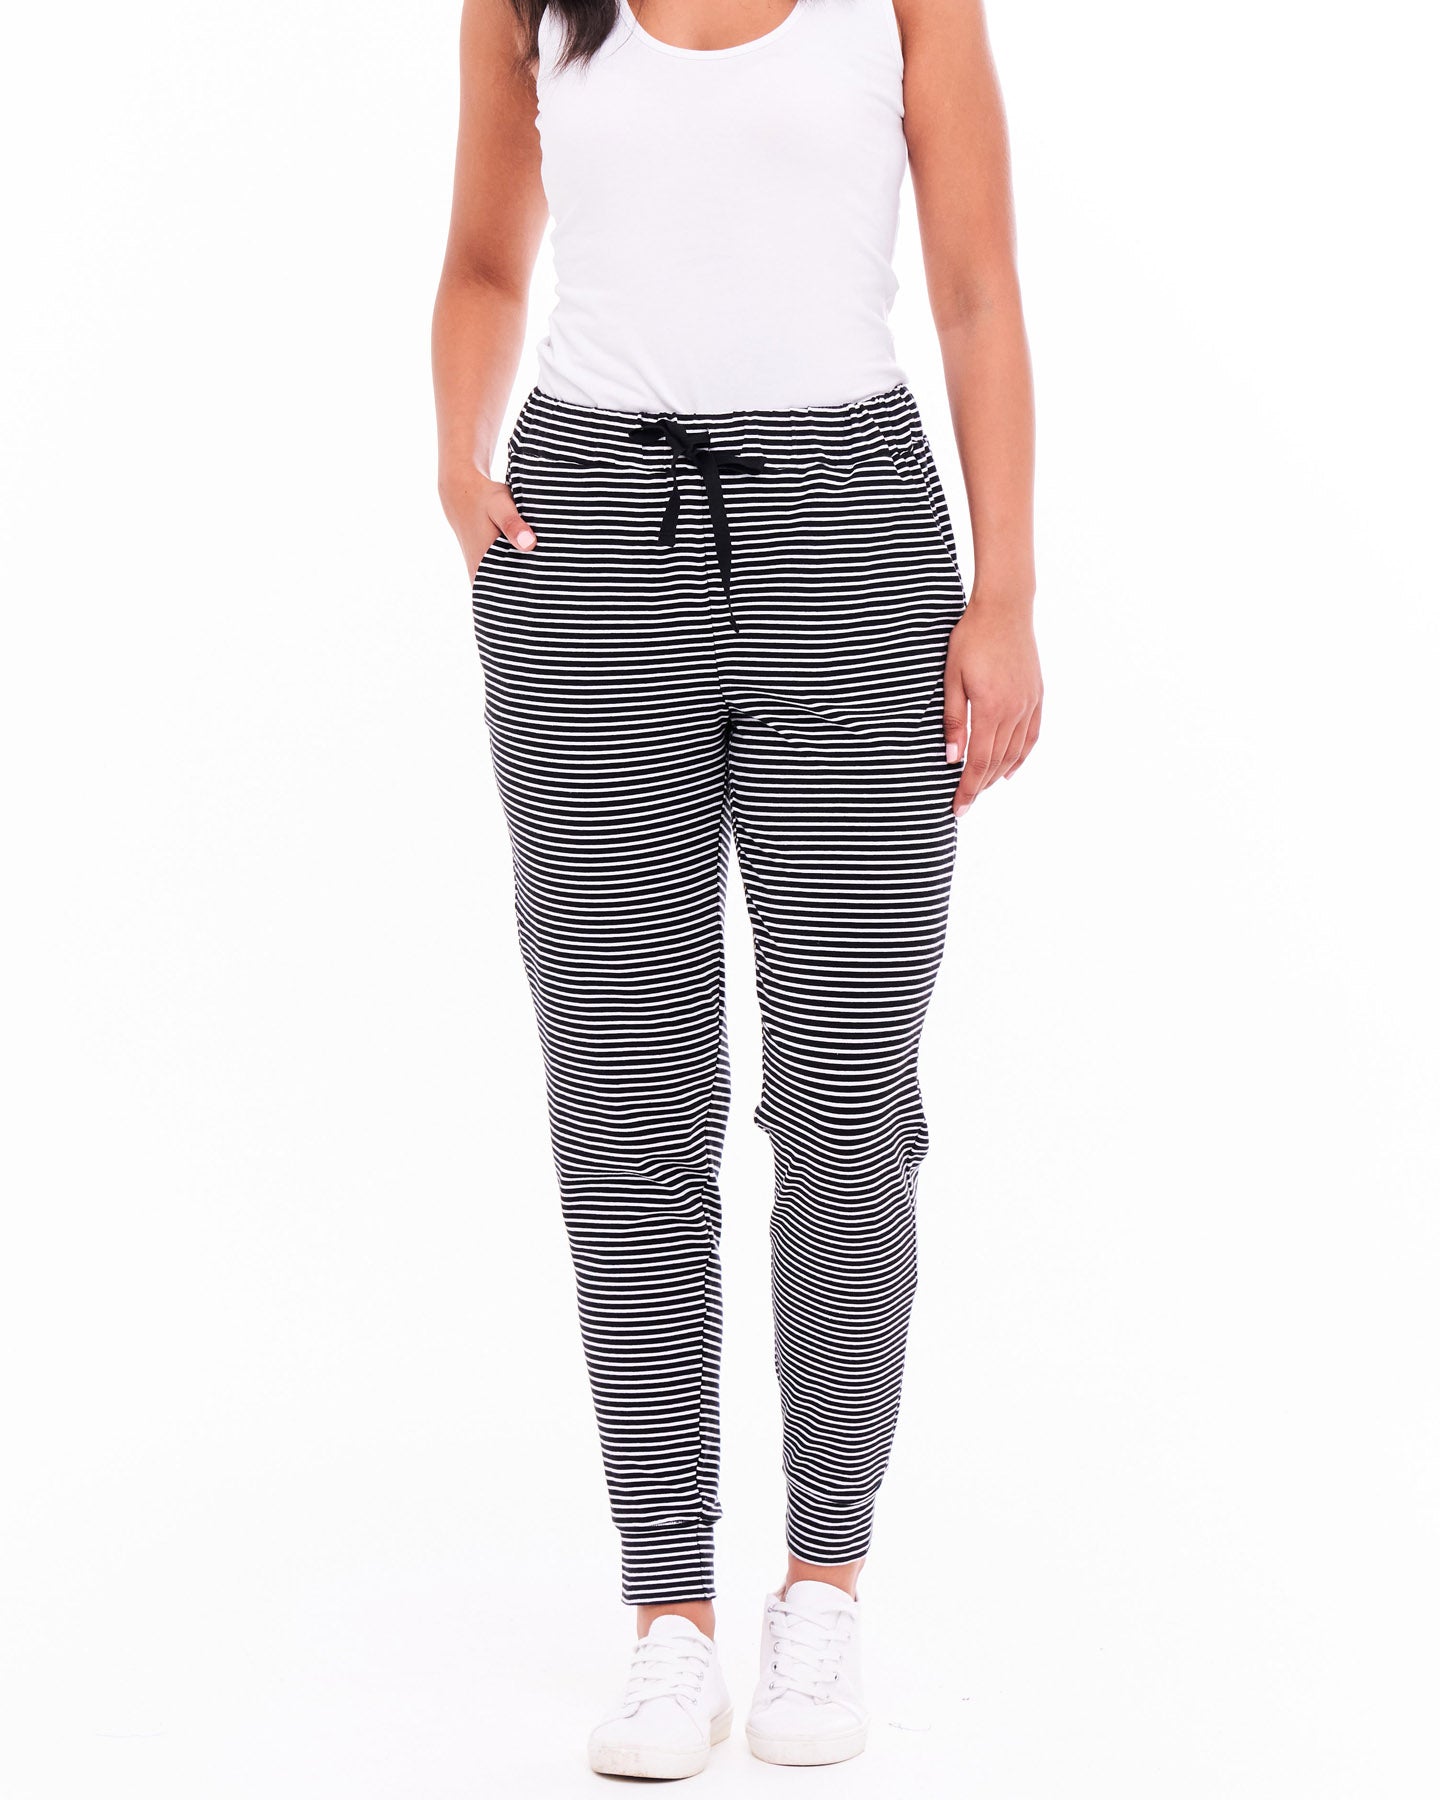 Heidi Stretchy Tapered Cotton Jogger Pants - Black/White Stripe